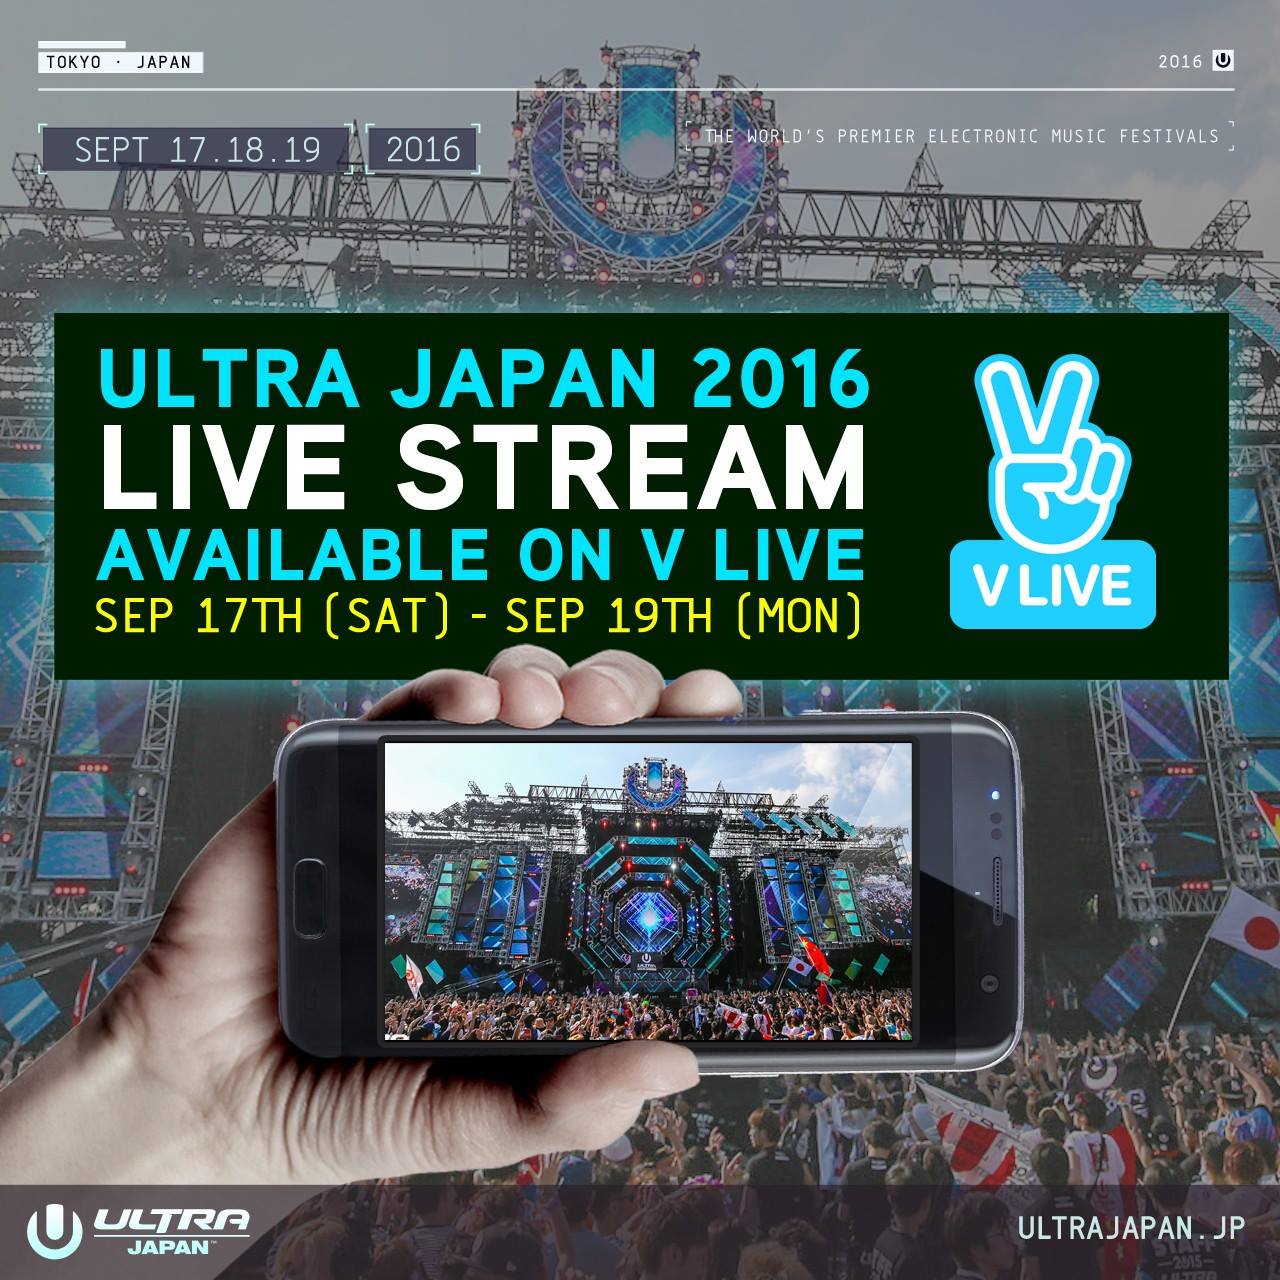 ULTRA JAPAN 2016 LIVE STREAM ON V LIVE